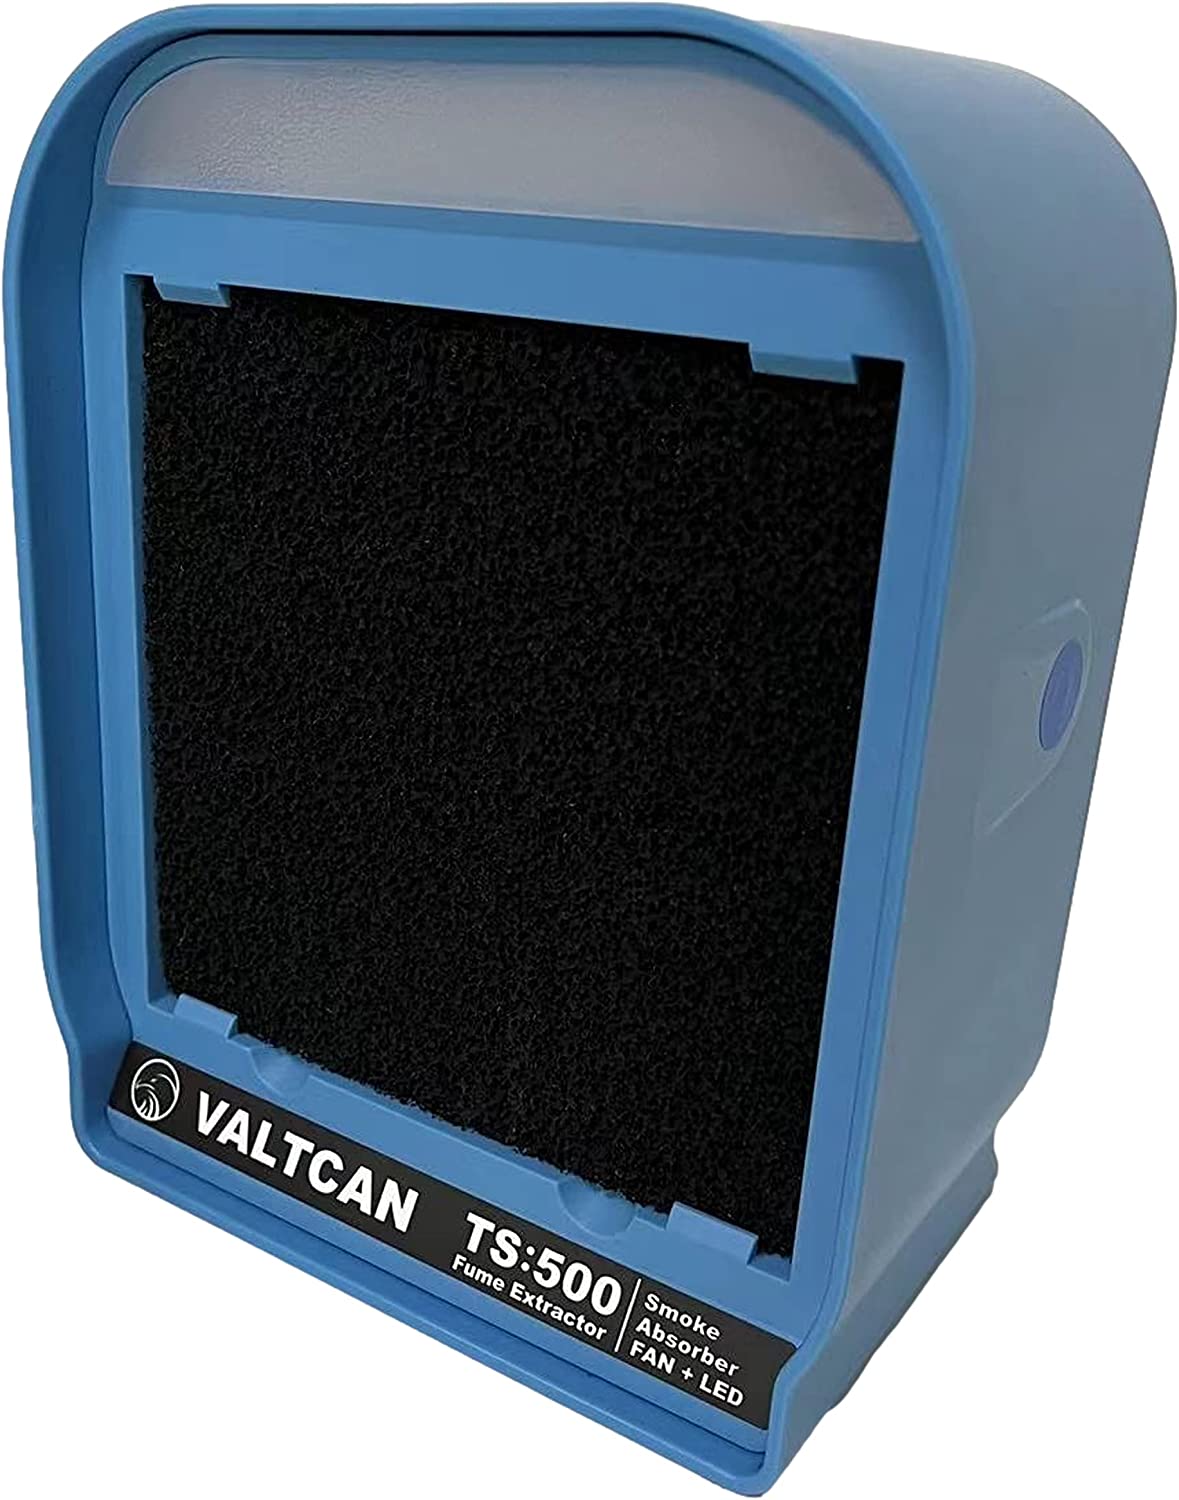 Valtcan TS:500 Rauchabsauger, Lötventilator, Rauchabsorber mit LED-Lichtlampe 